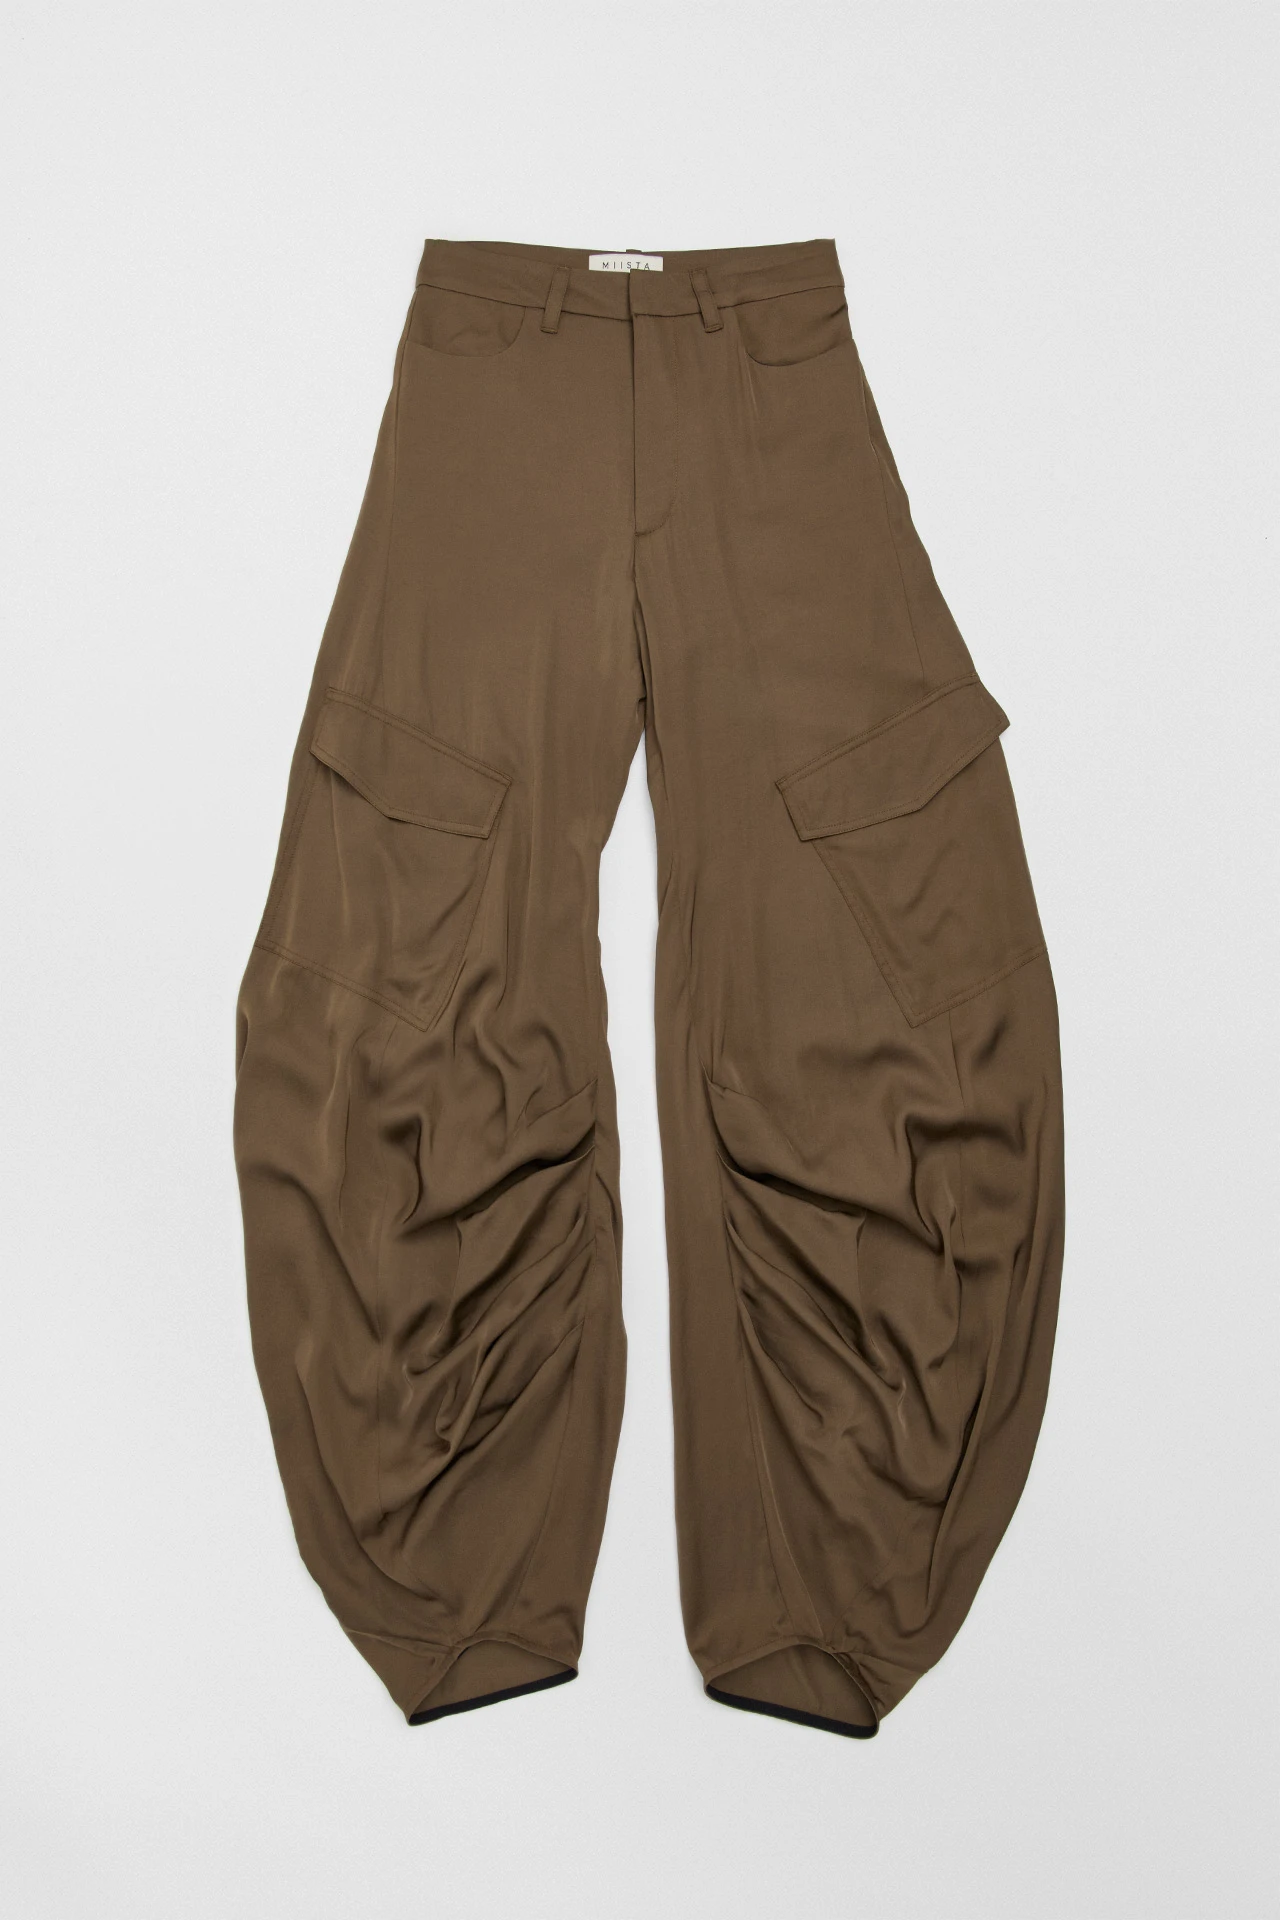 Miista-sibuca-brown-trousers-01